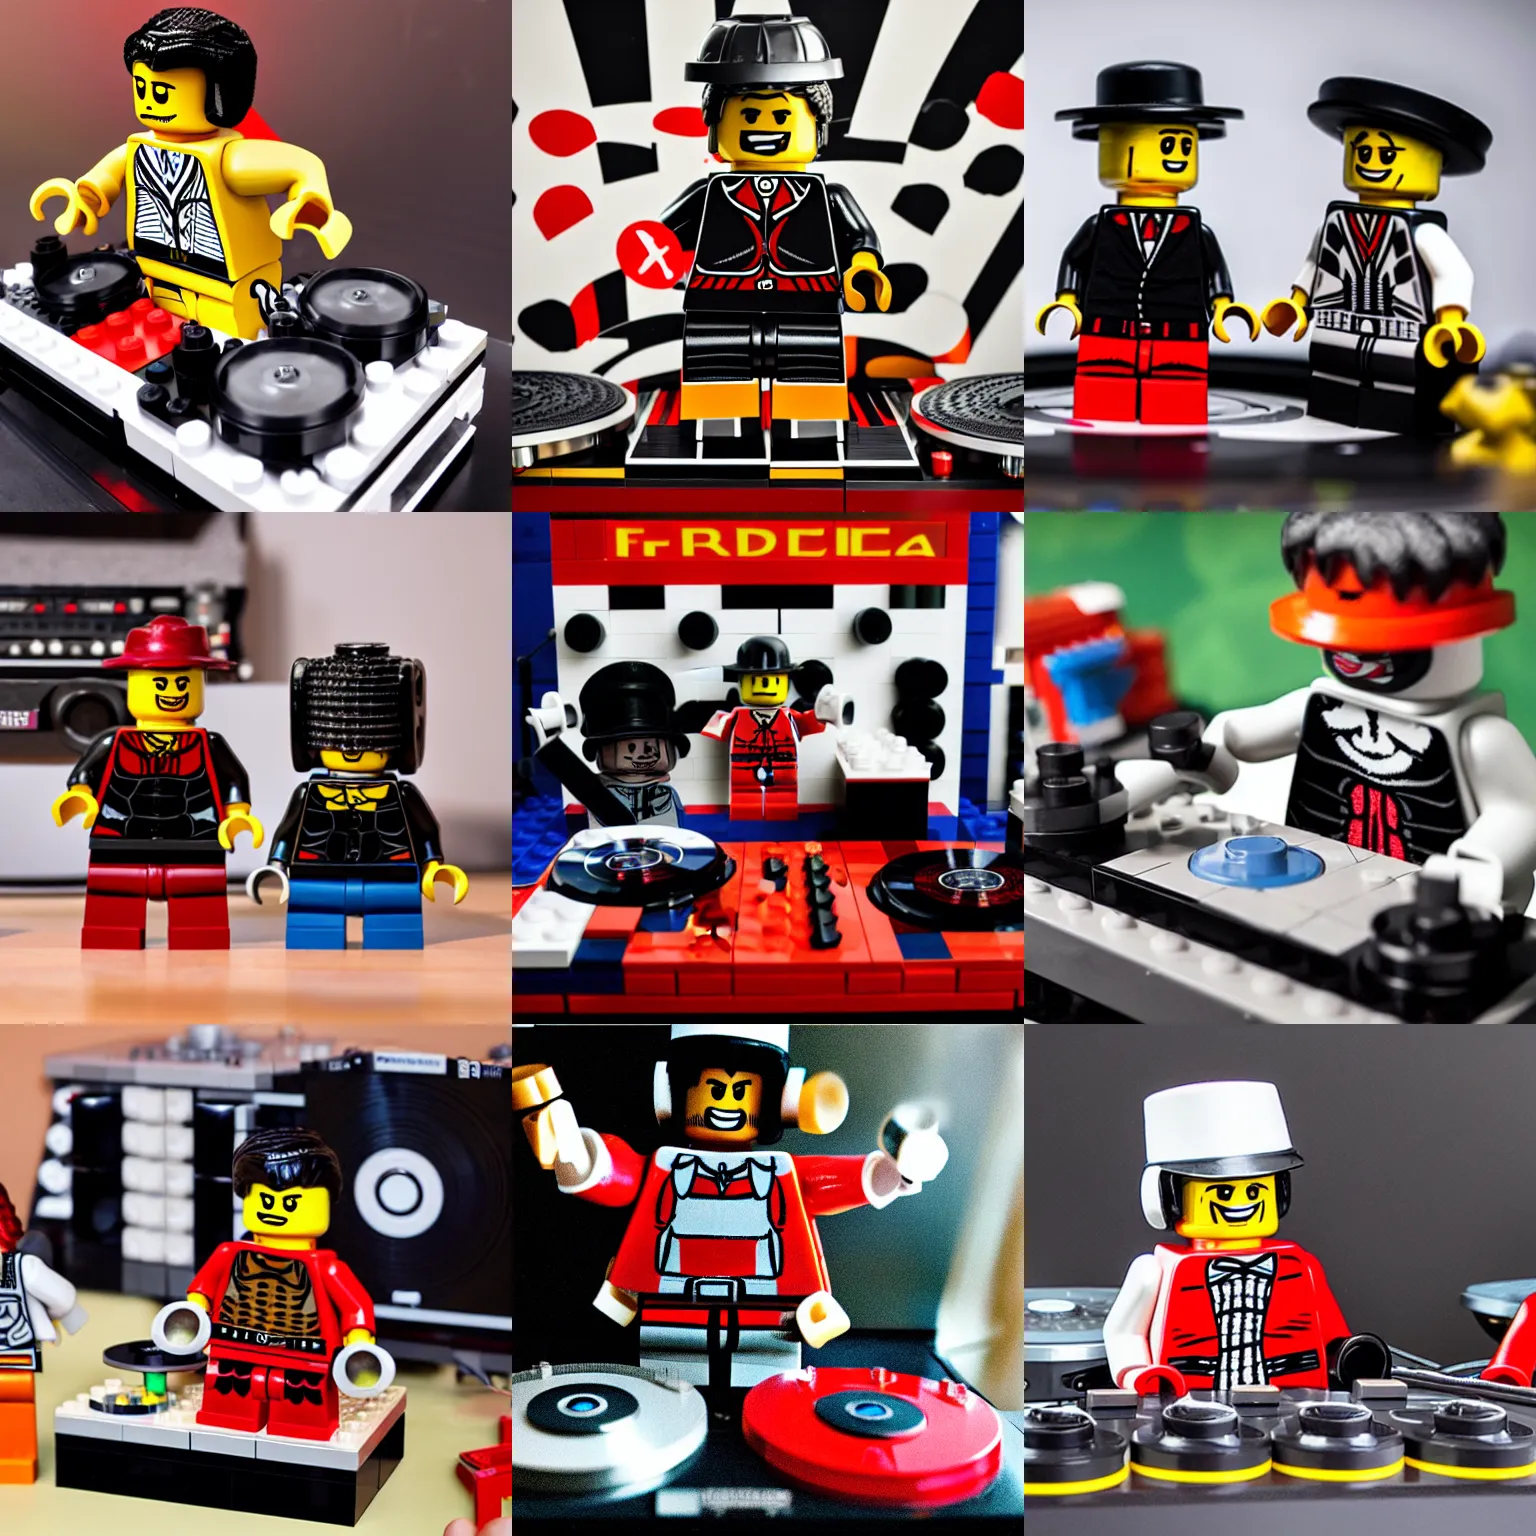 Prompt: Lego Freddie Kruger DJing with realistic DJ turntables